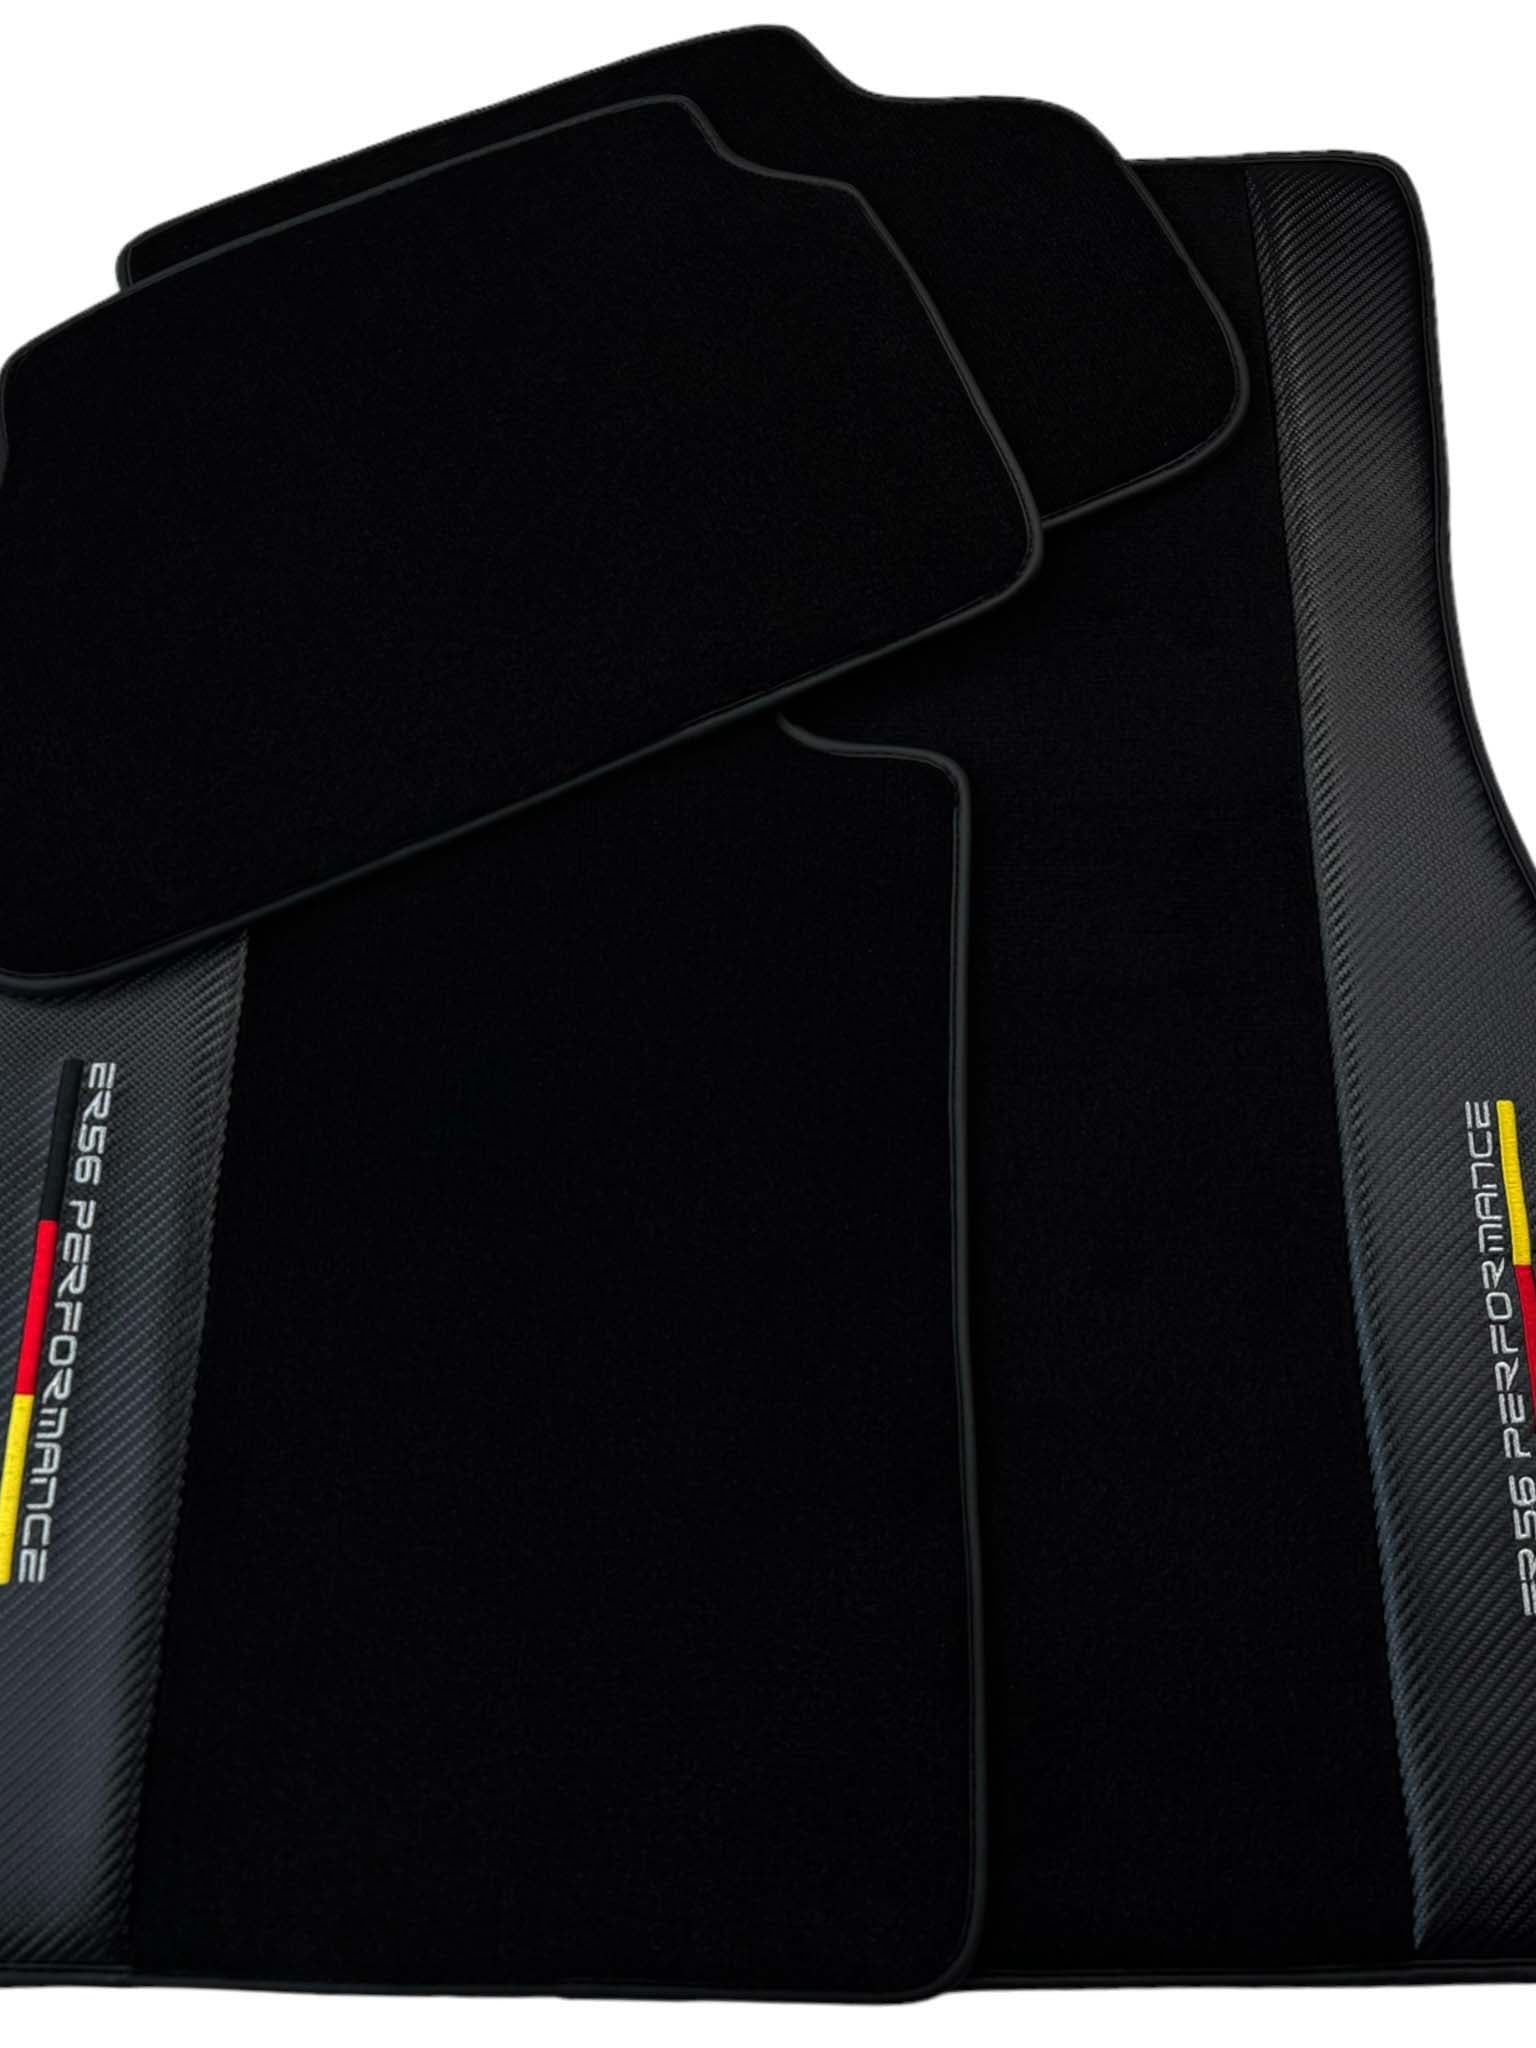 Black Floor Floor Mats For BMW 7 Series G11 | ER56 Performance | Carbon Edition